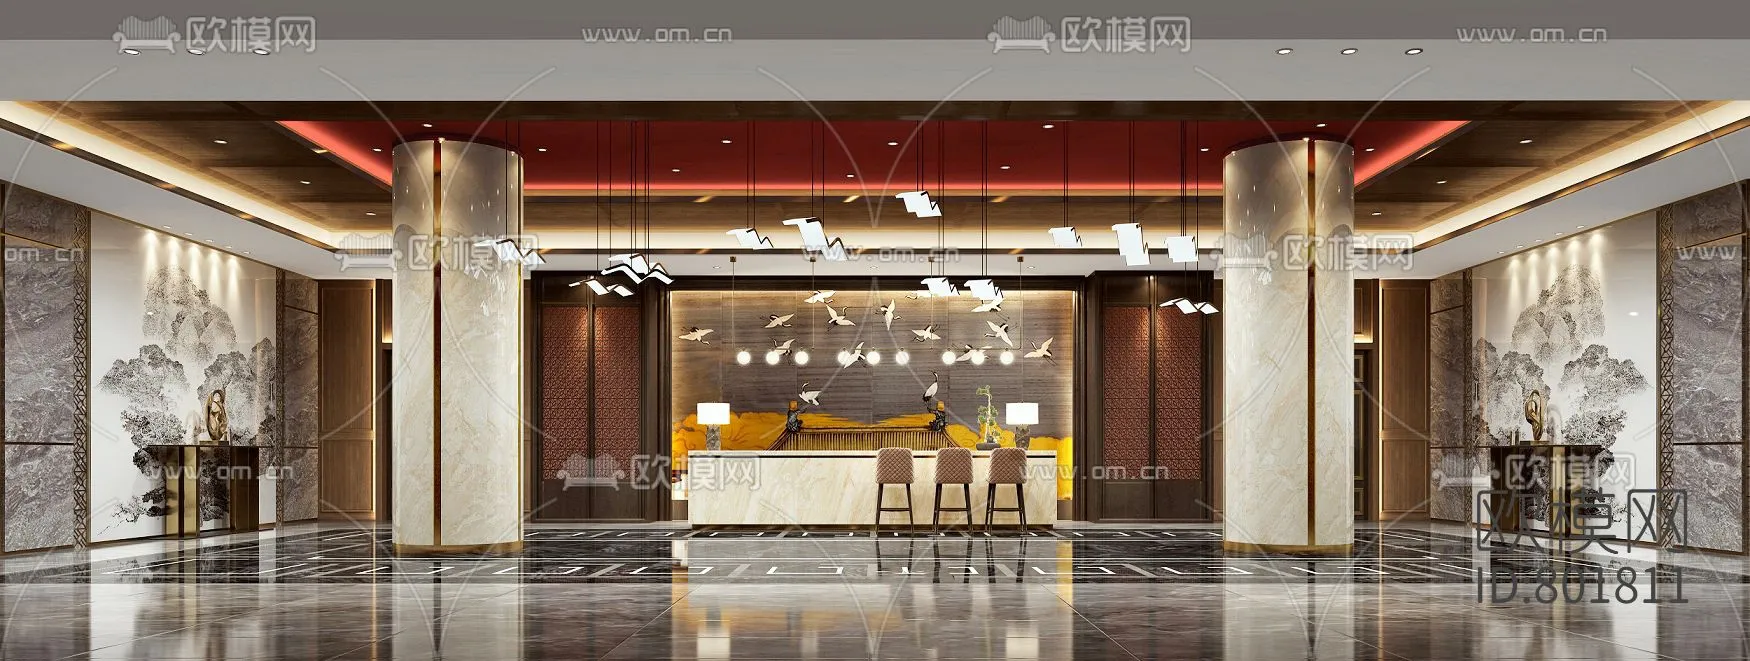 Hotel Lobby 3D Scenes – 0521